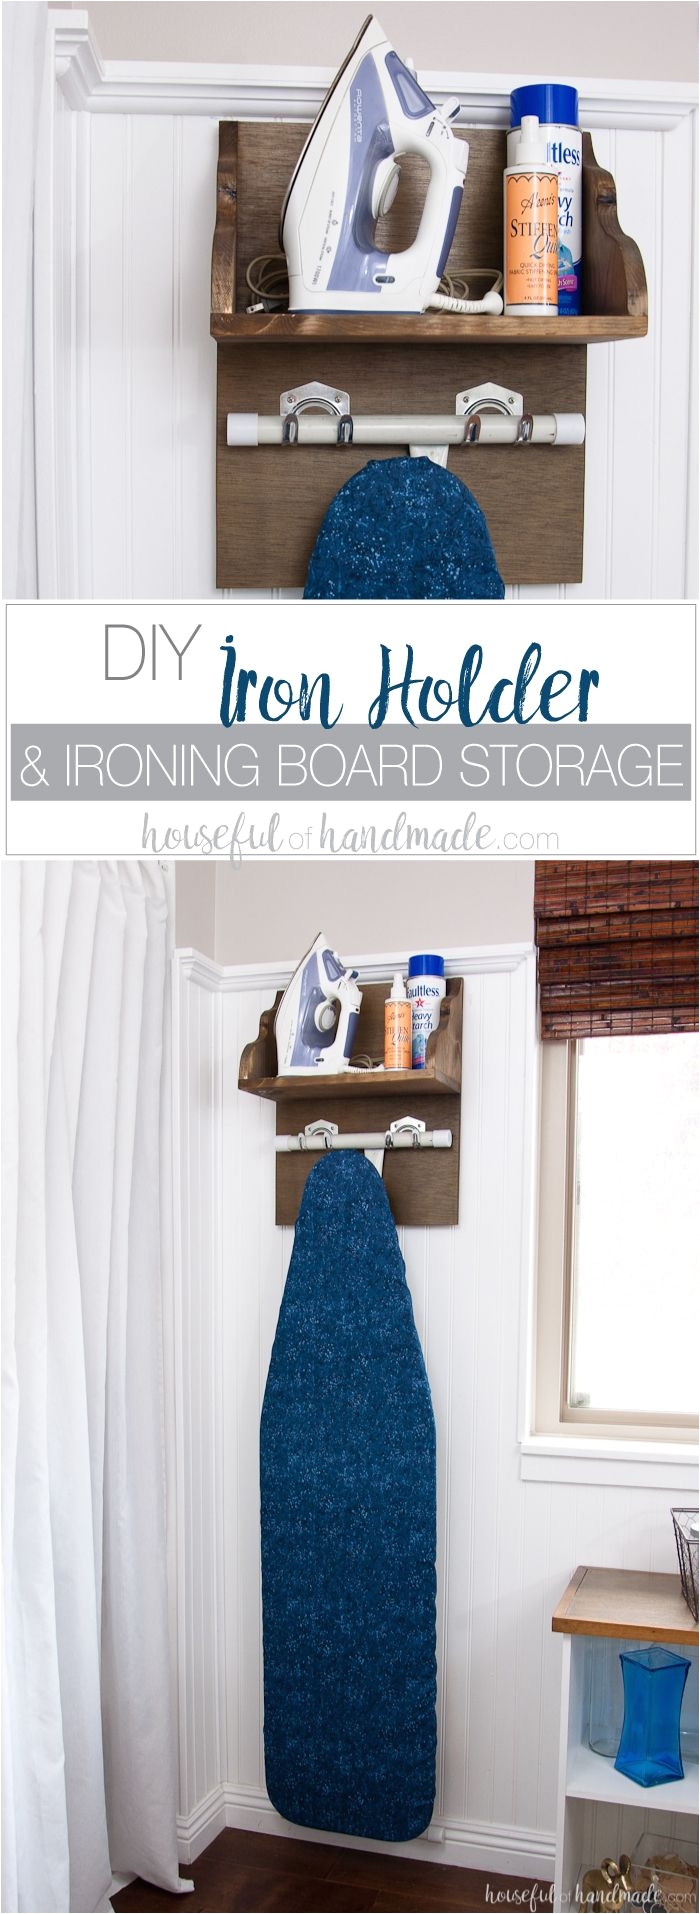 Hat Rack Target Store Diy Iron Holder with Ironing Board Storage Pinterest Ironing